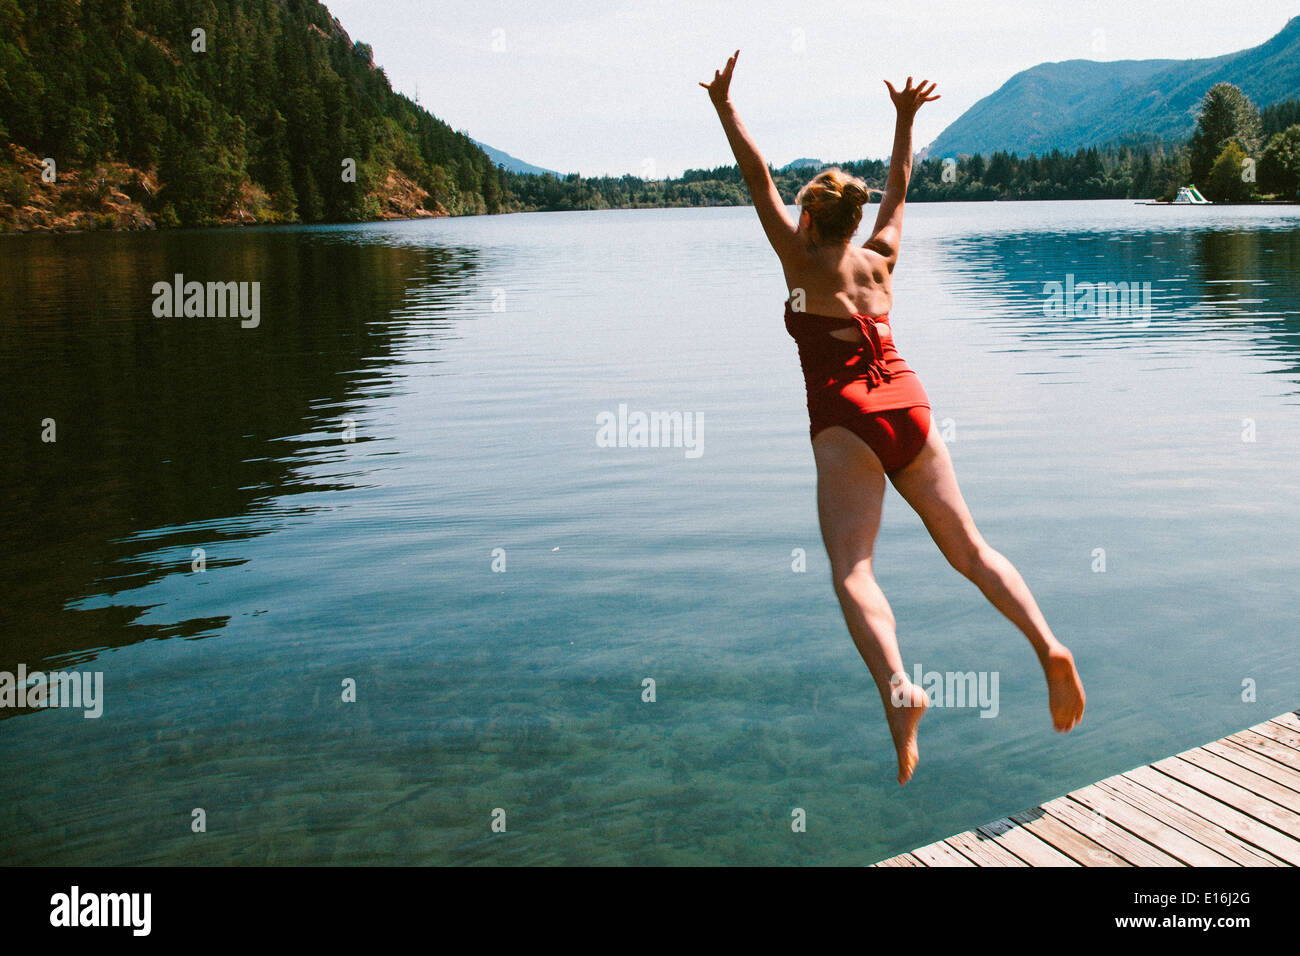 Woman jumping into water, Lake Cowichan, British Columbia, Canada Stock Photo